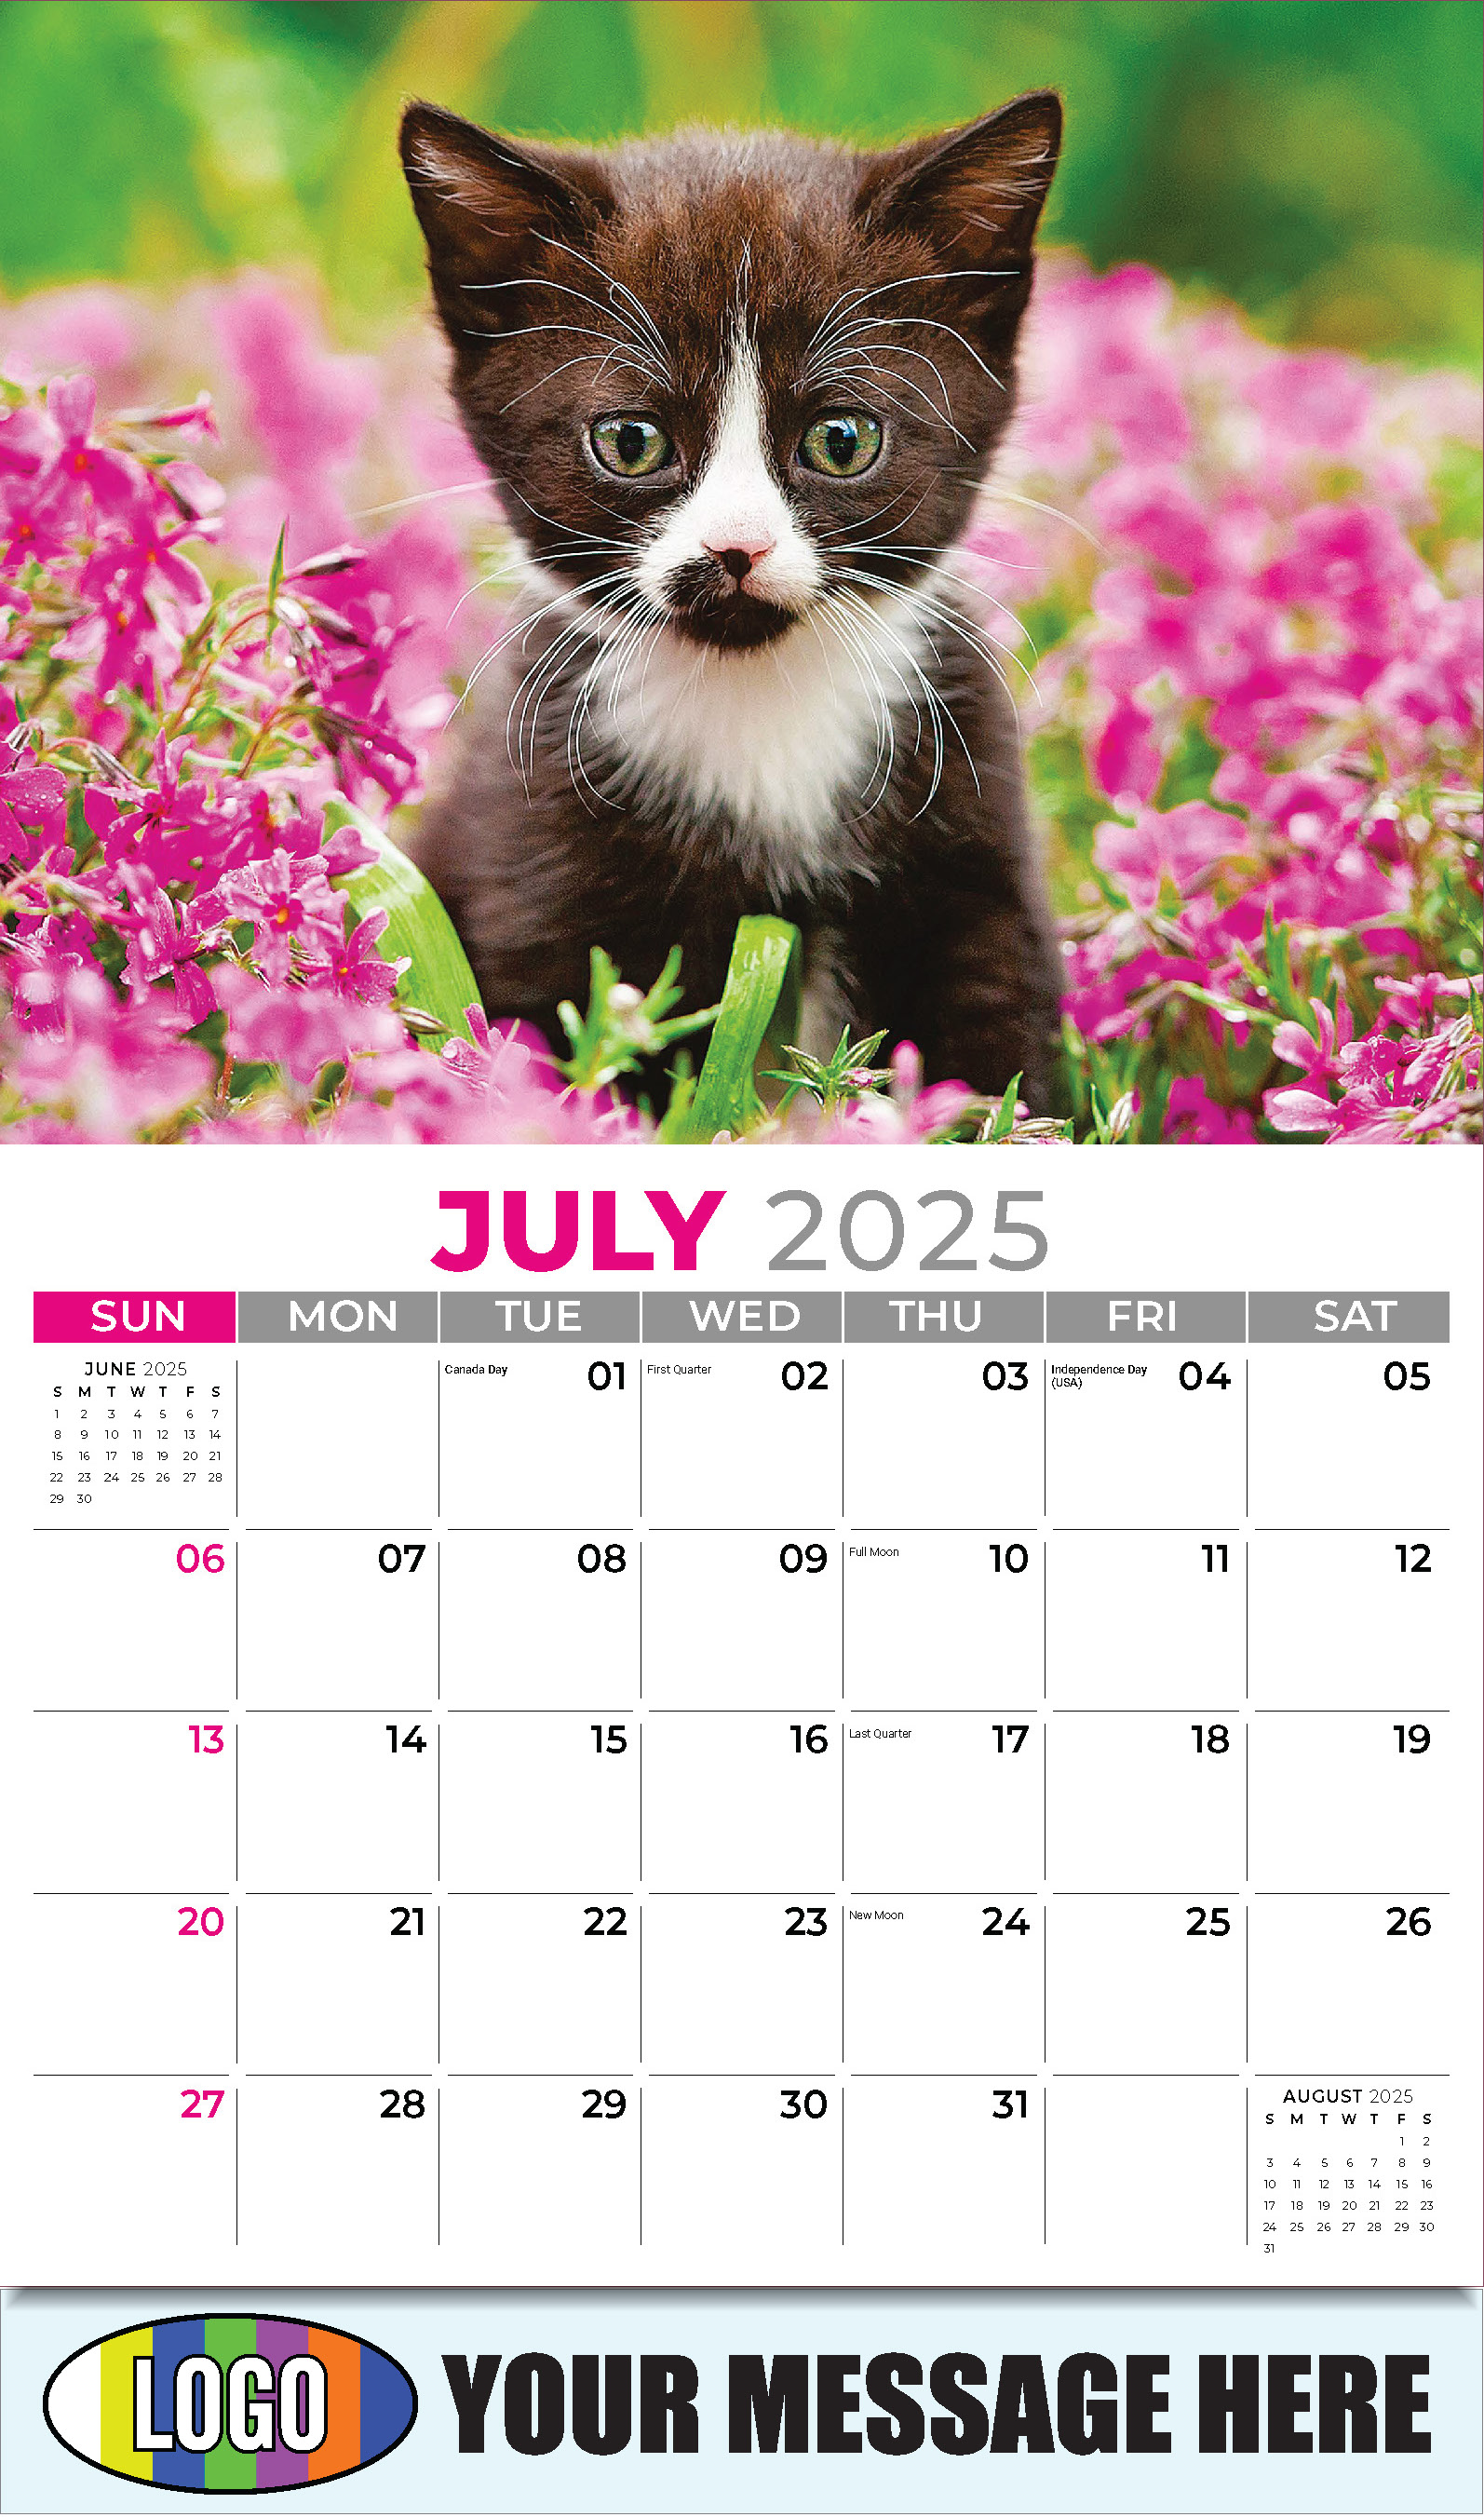 Kittens 2025 Business Promo Wall Calendar - July